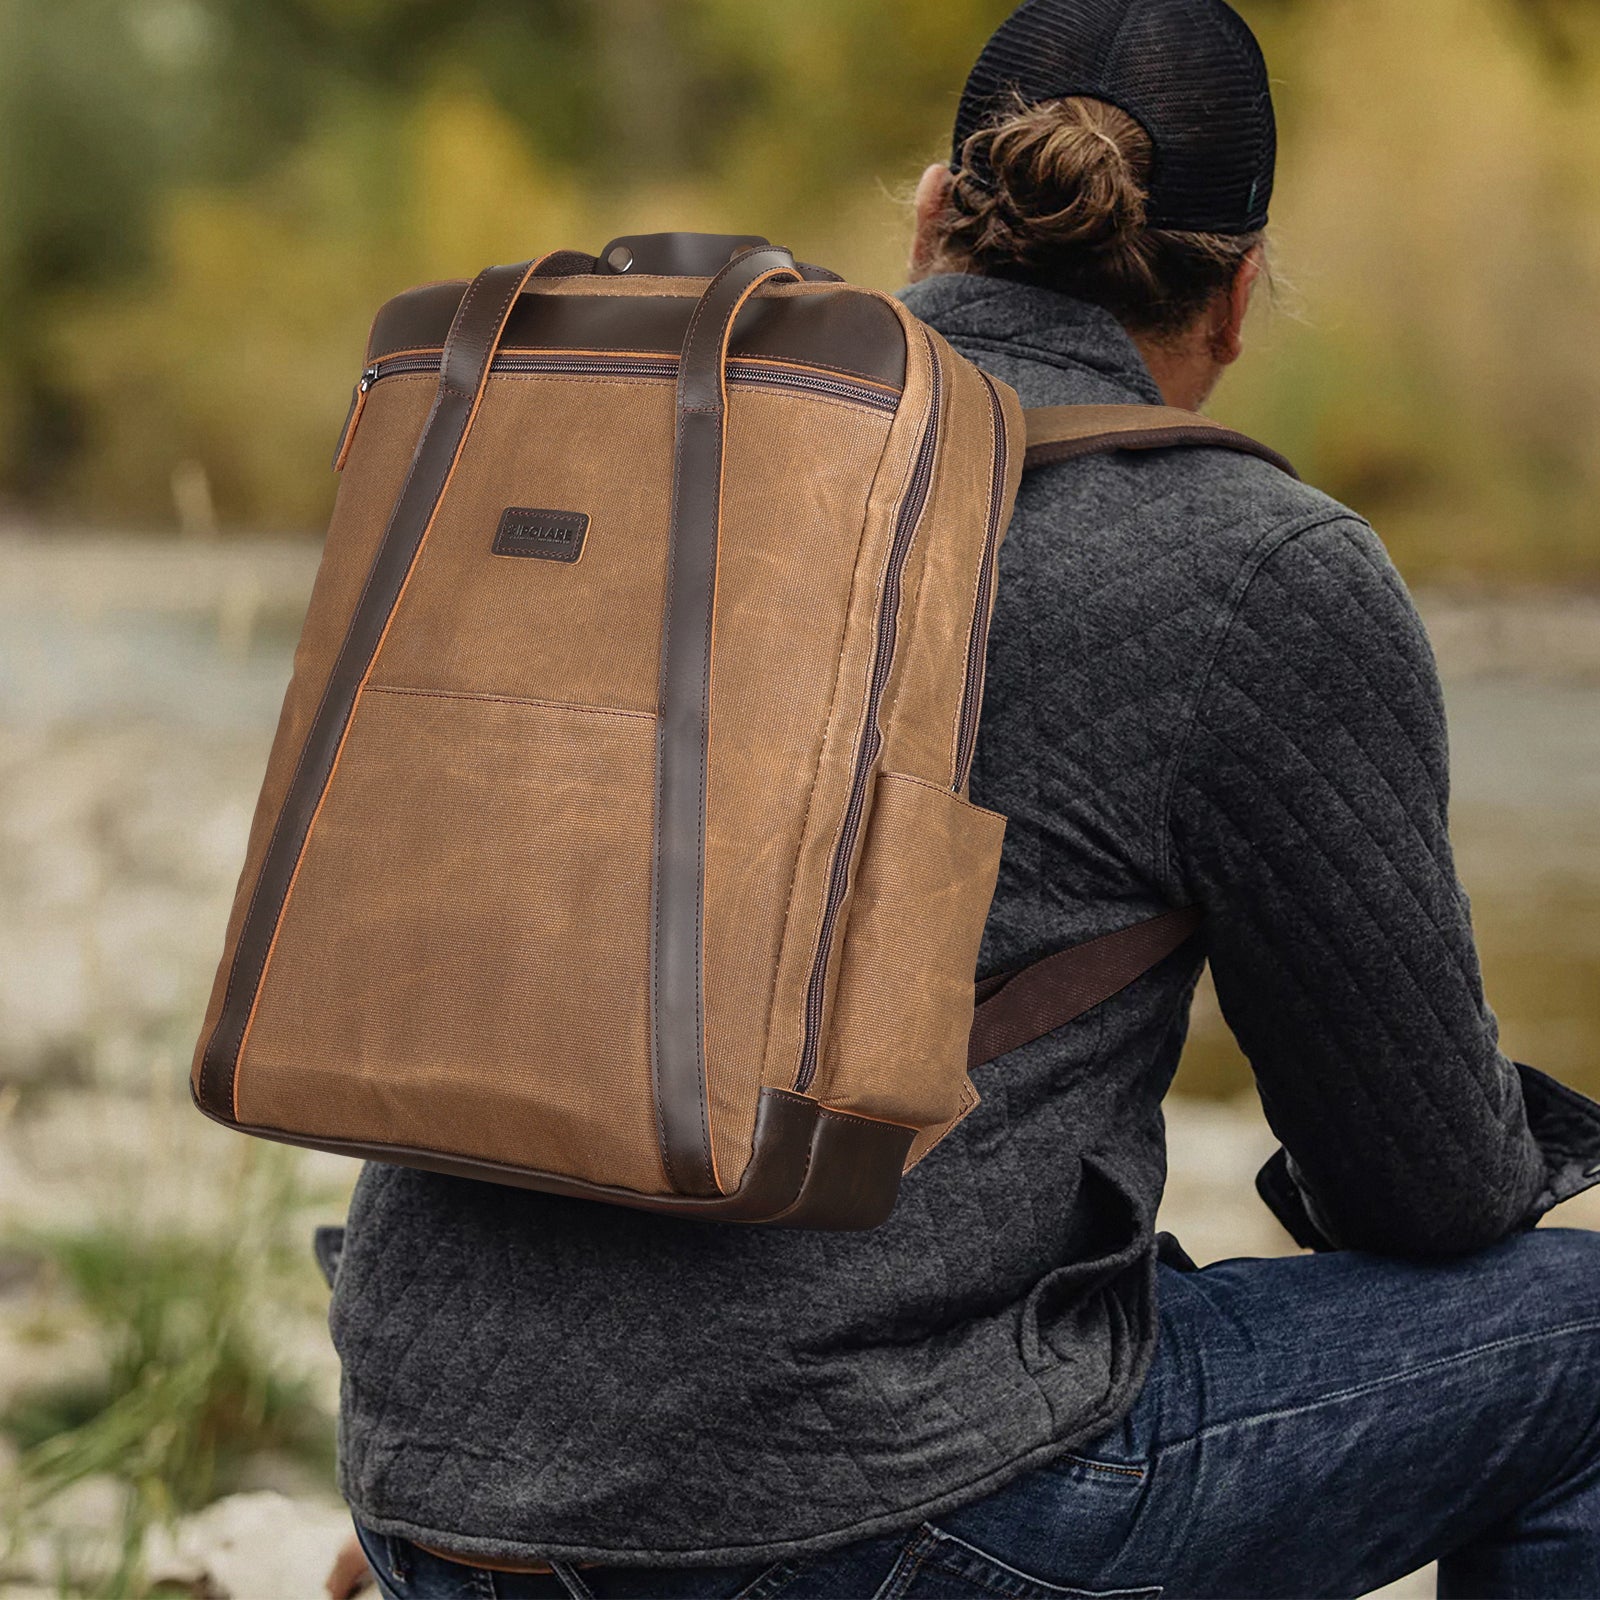 Full Grain Leather Trim Waxed Canvas Travel Backpack Waterproof Daypack (Model Display)